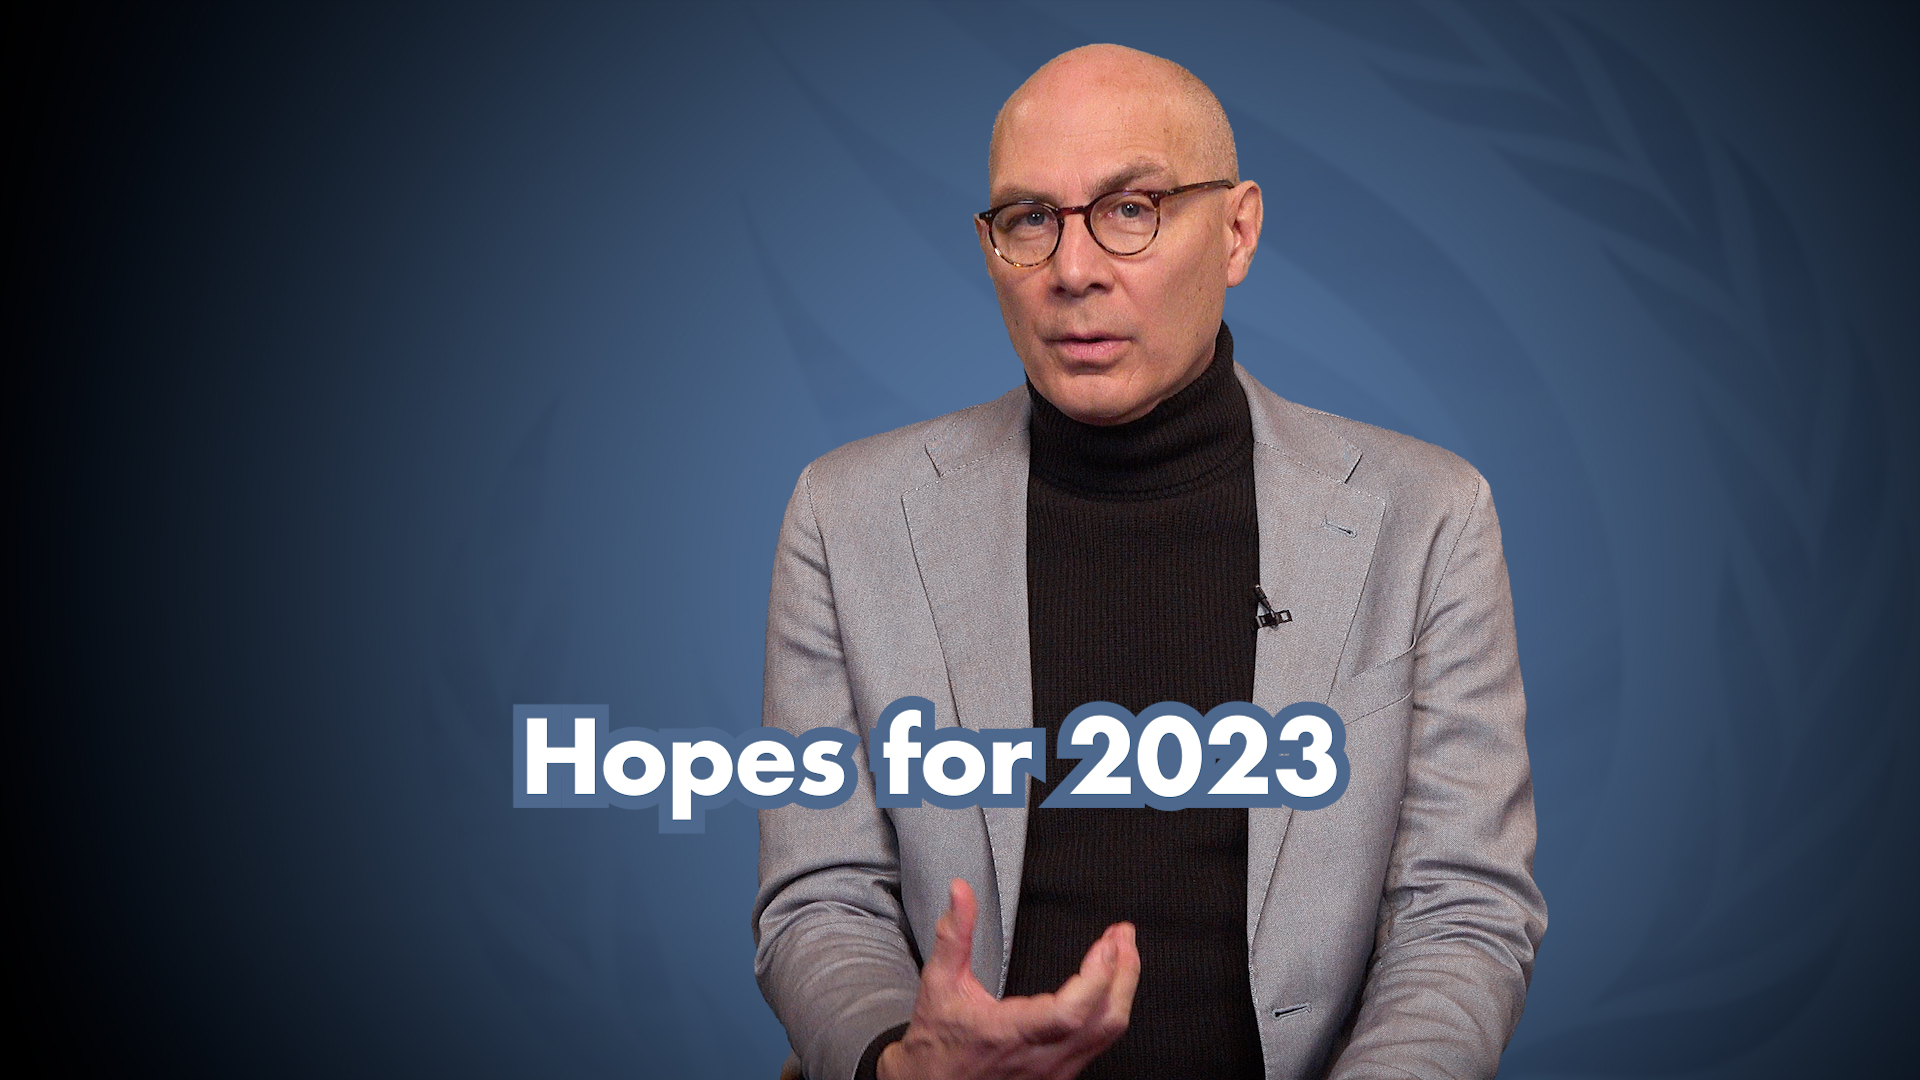 Video statement screenshot: Hopes for 2023